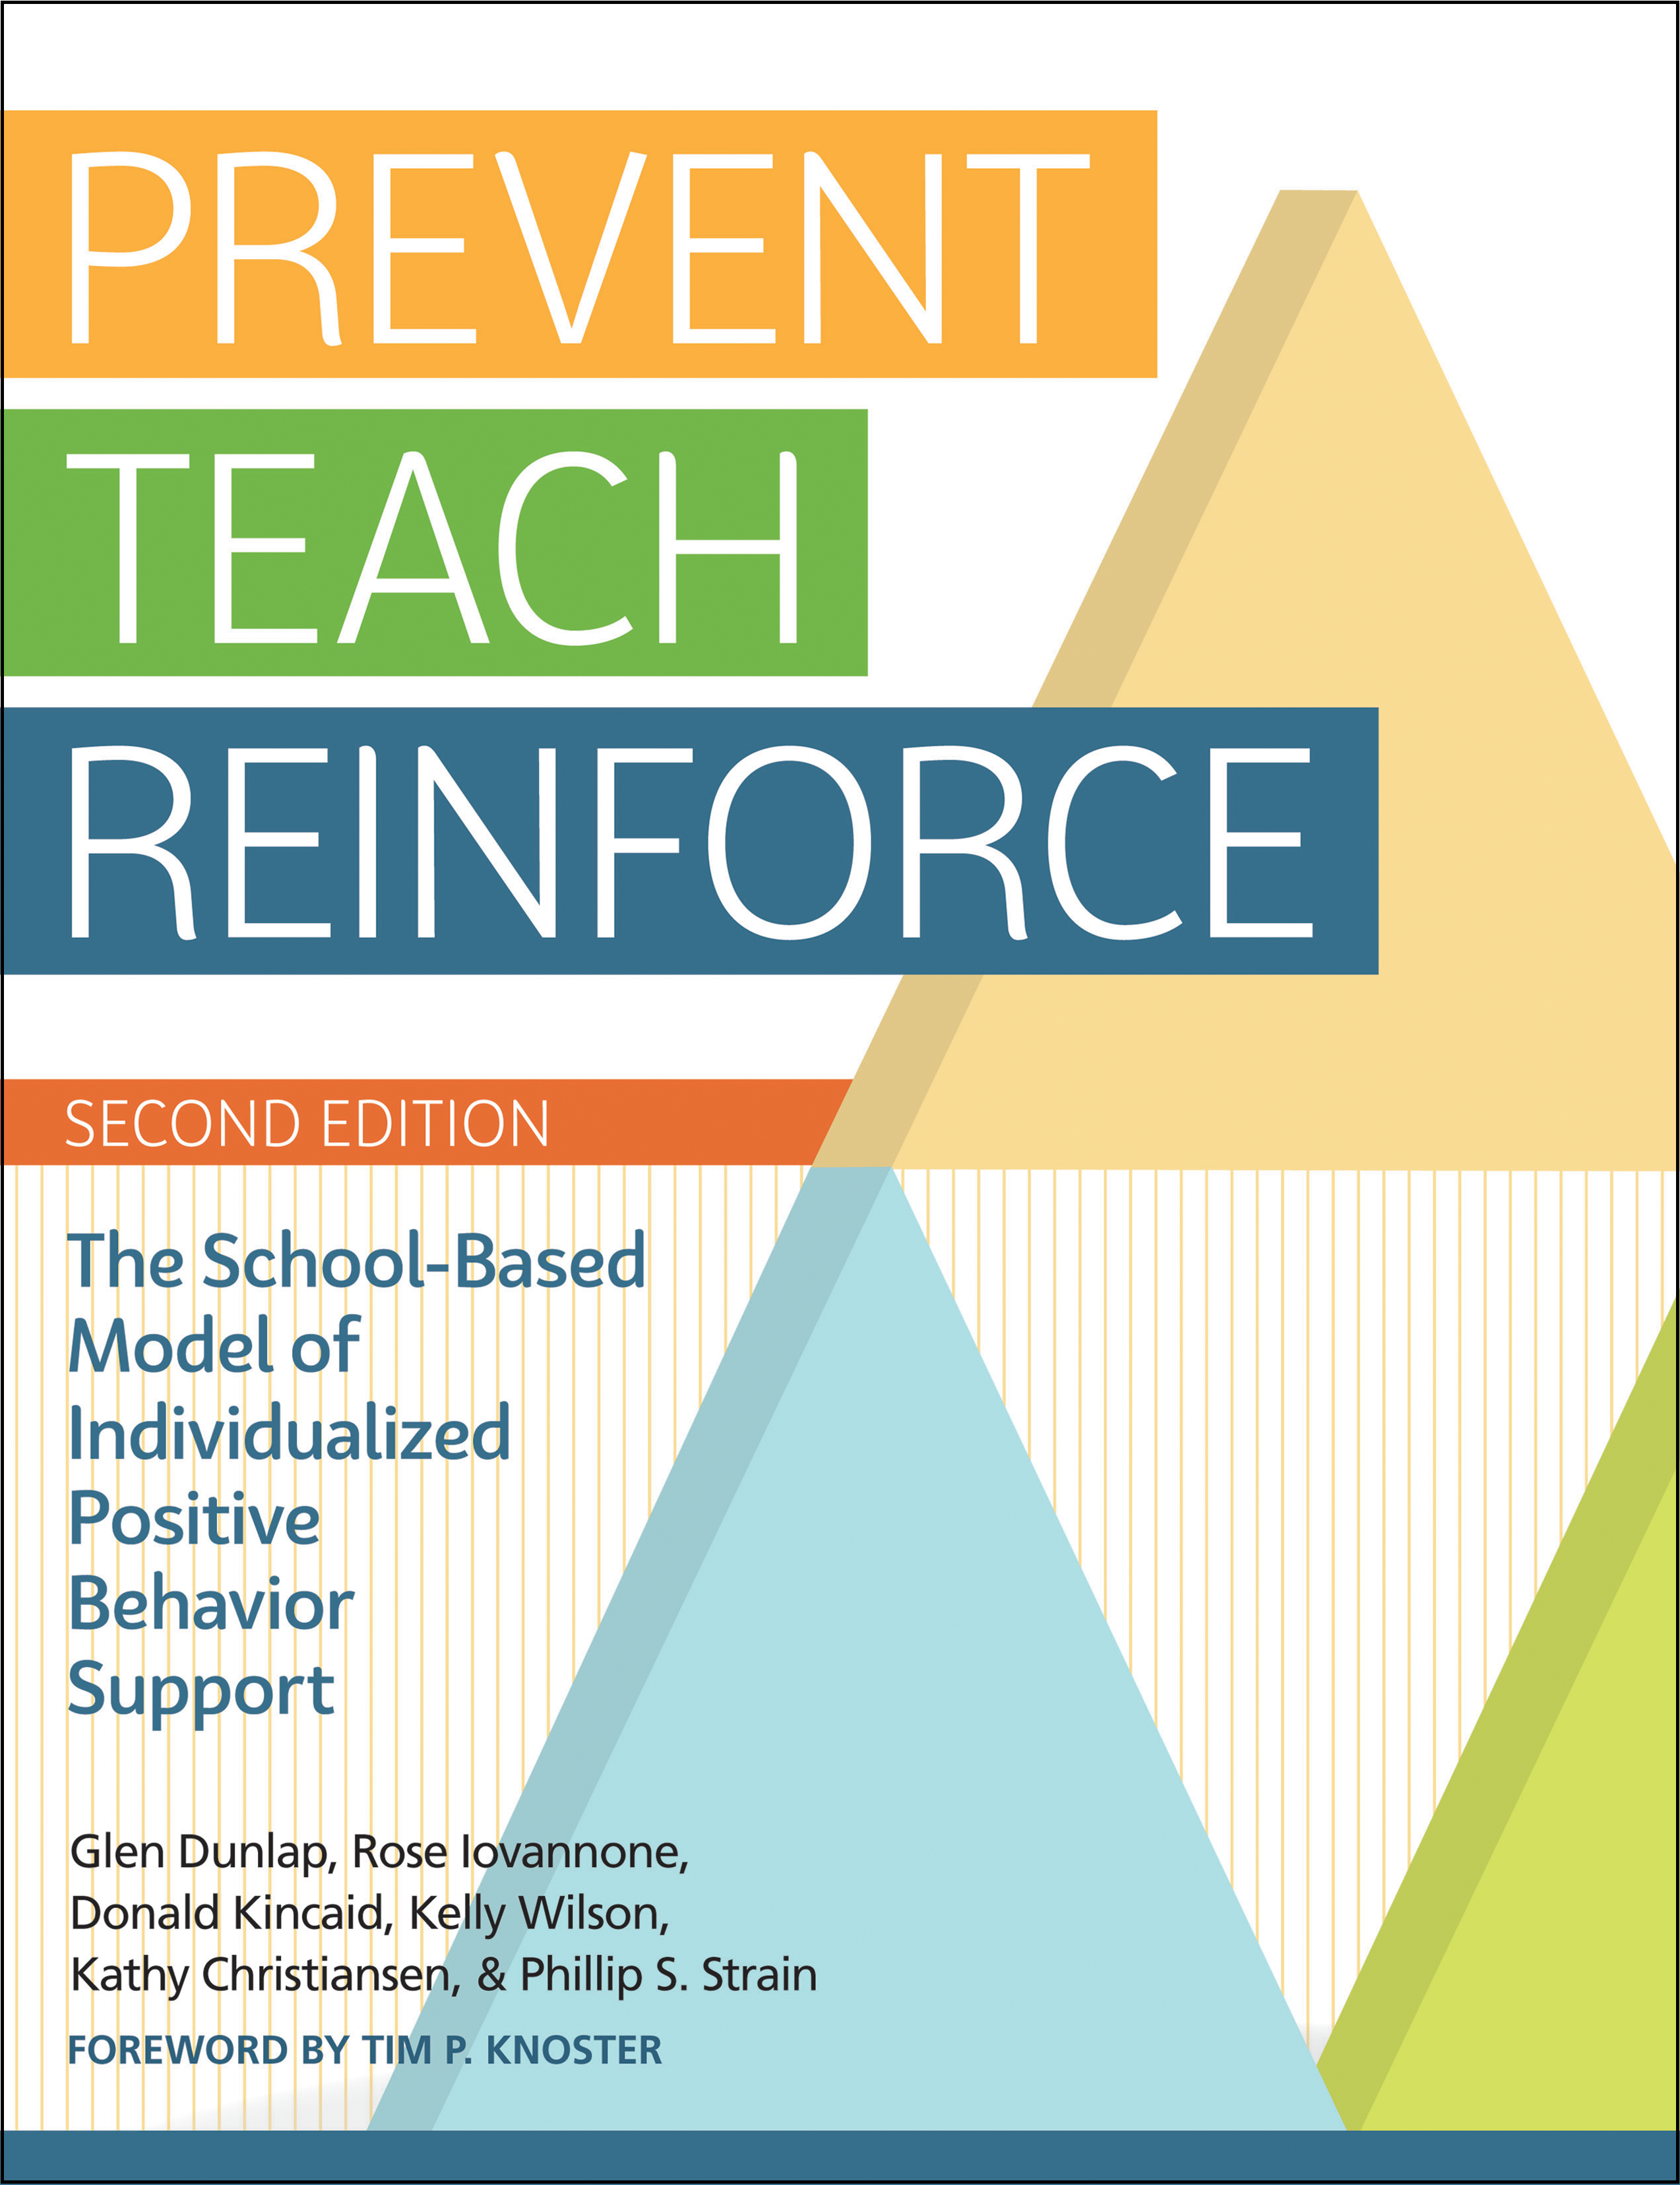 Prevent-Teach-Reinforce Seminar